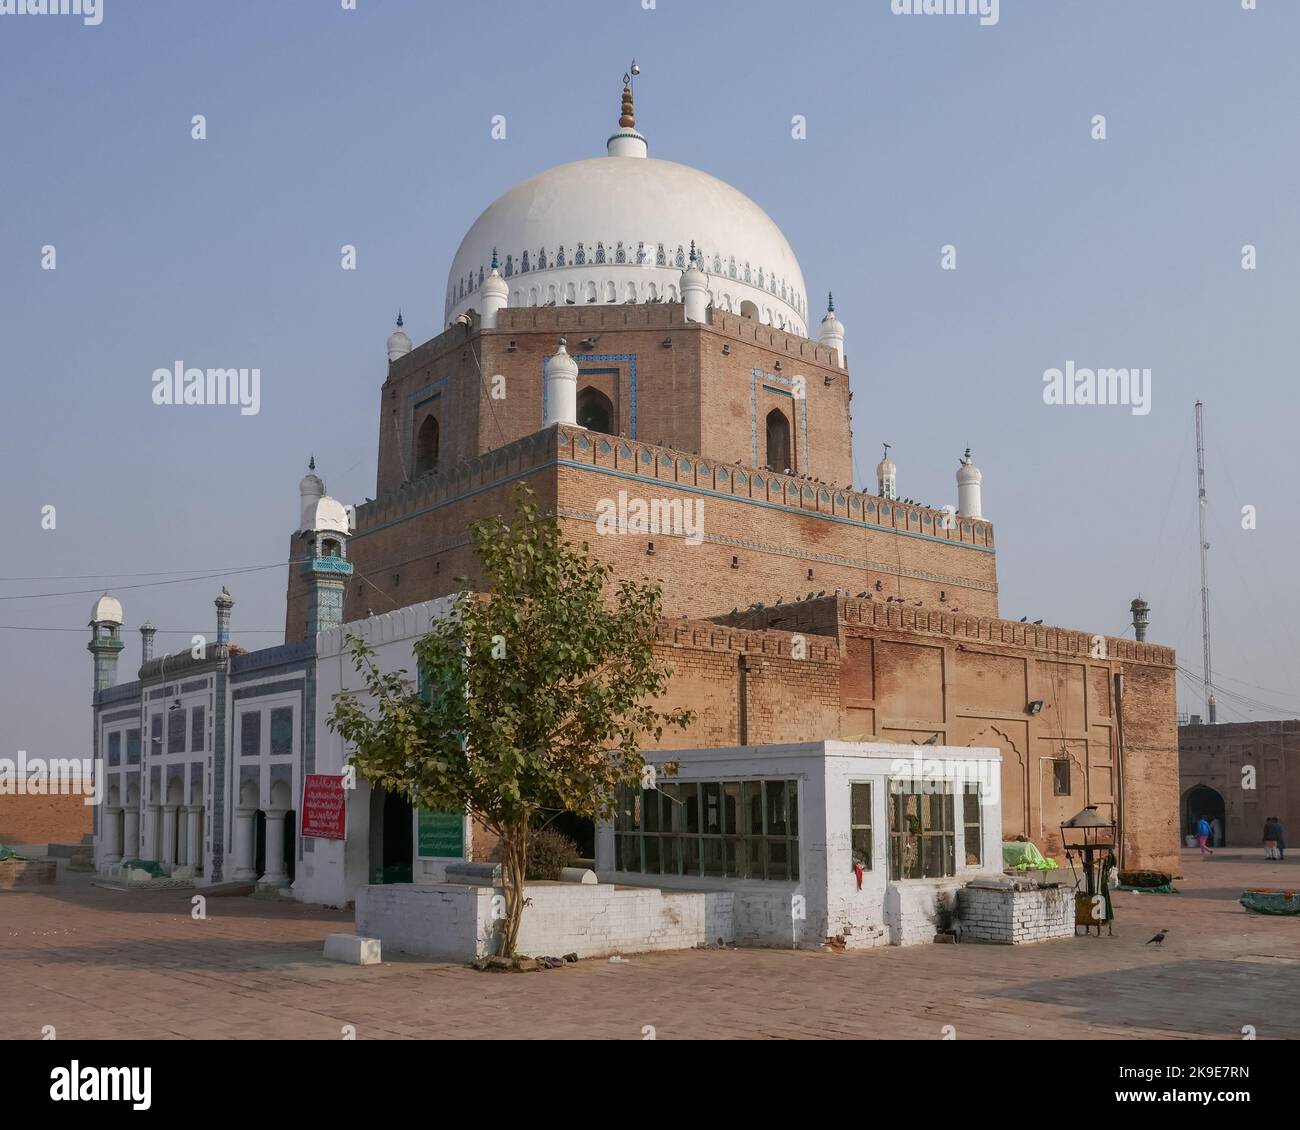 Vista panoramica del bellissimo mausoleo medievale e santuario dell'uomo santo musulmano Bahauddin Zakariya, Multan, Punjab, Pakistan Foto Stock